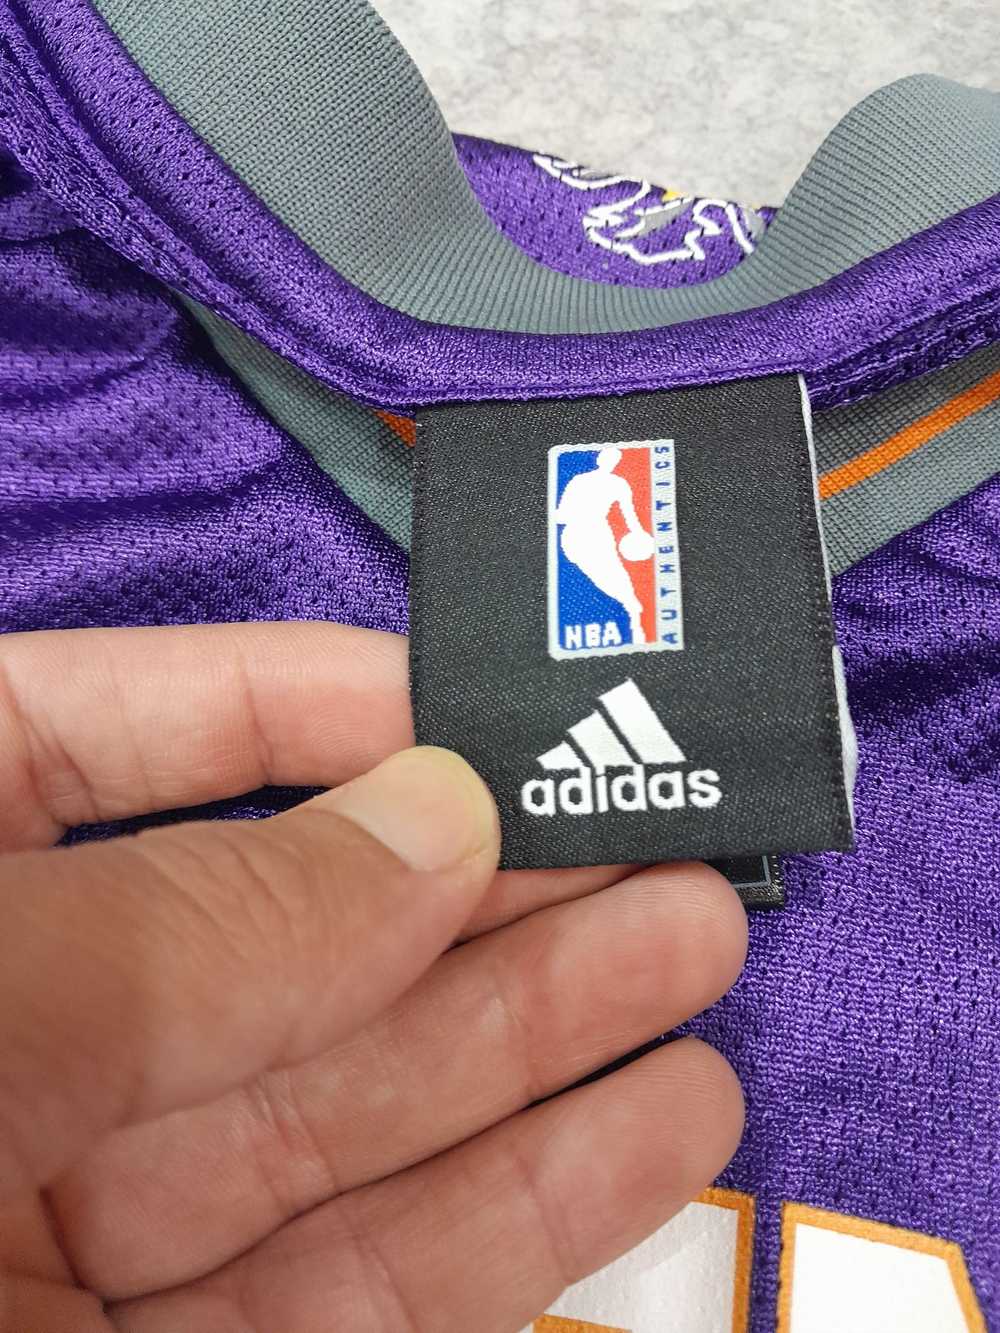 Adidas × NBA × Very Rare Phoenix Suns x Steve Nash - image 5